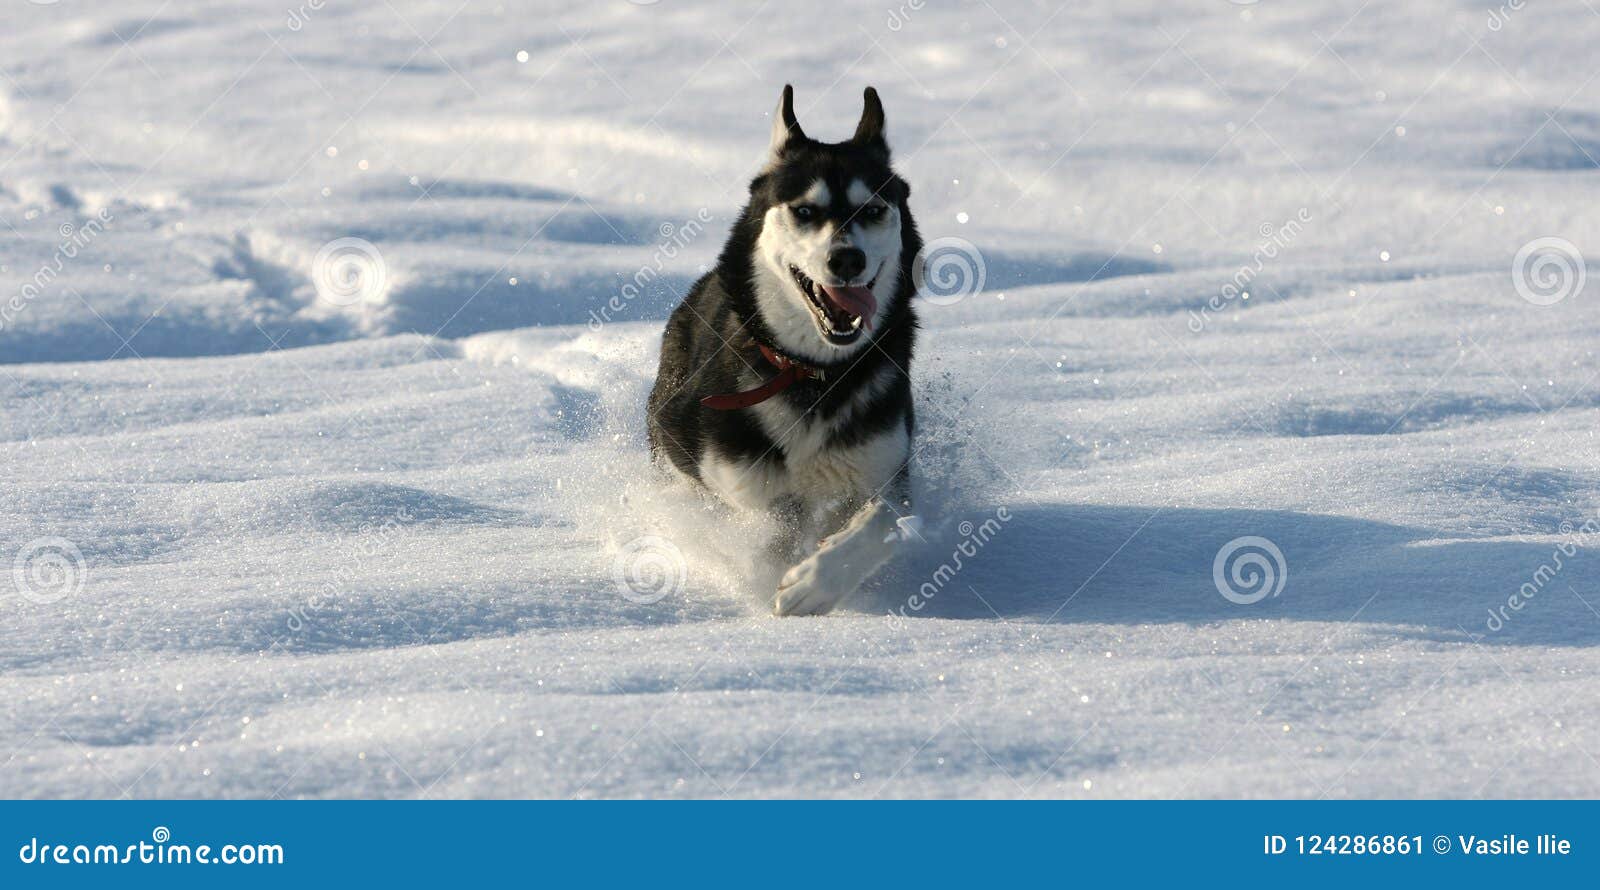 siberian husky running fast over the snow